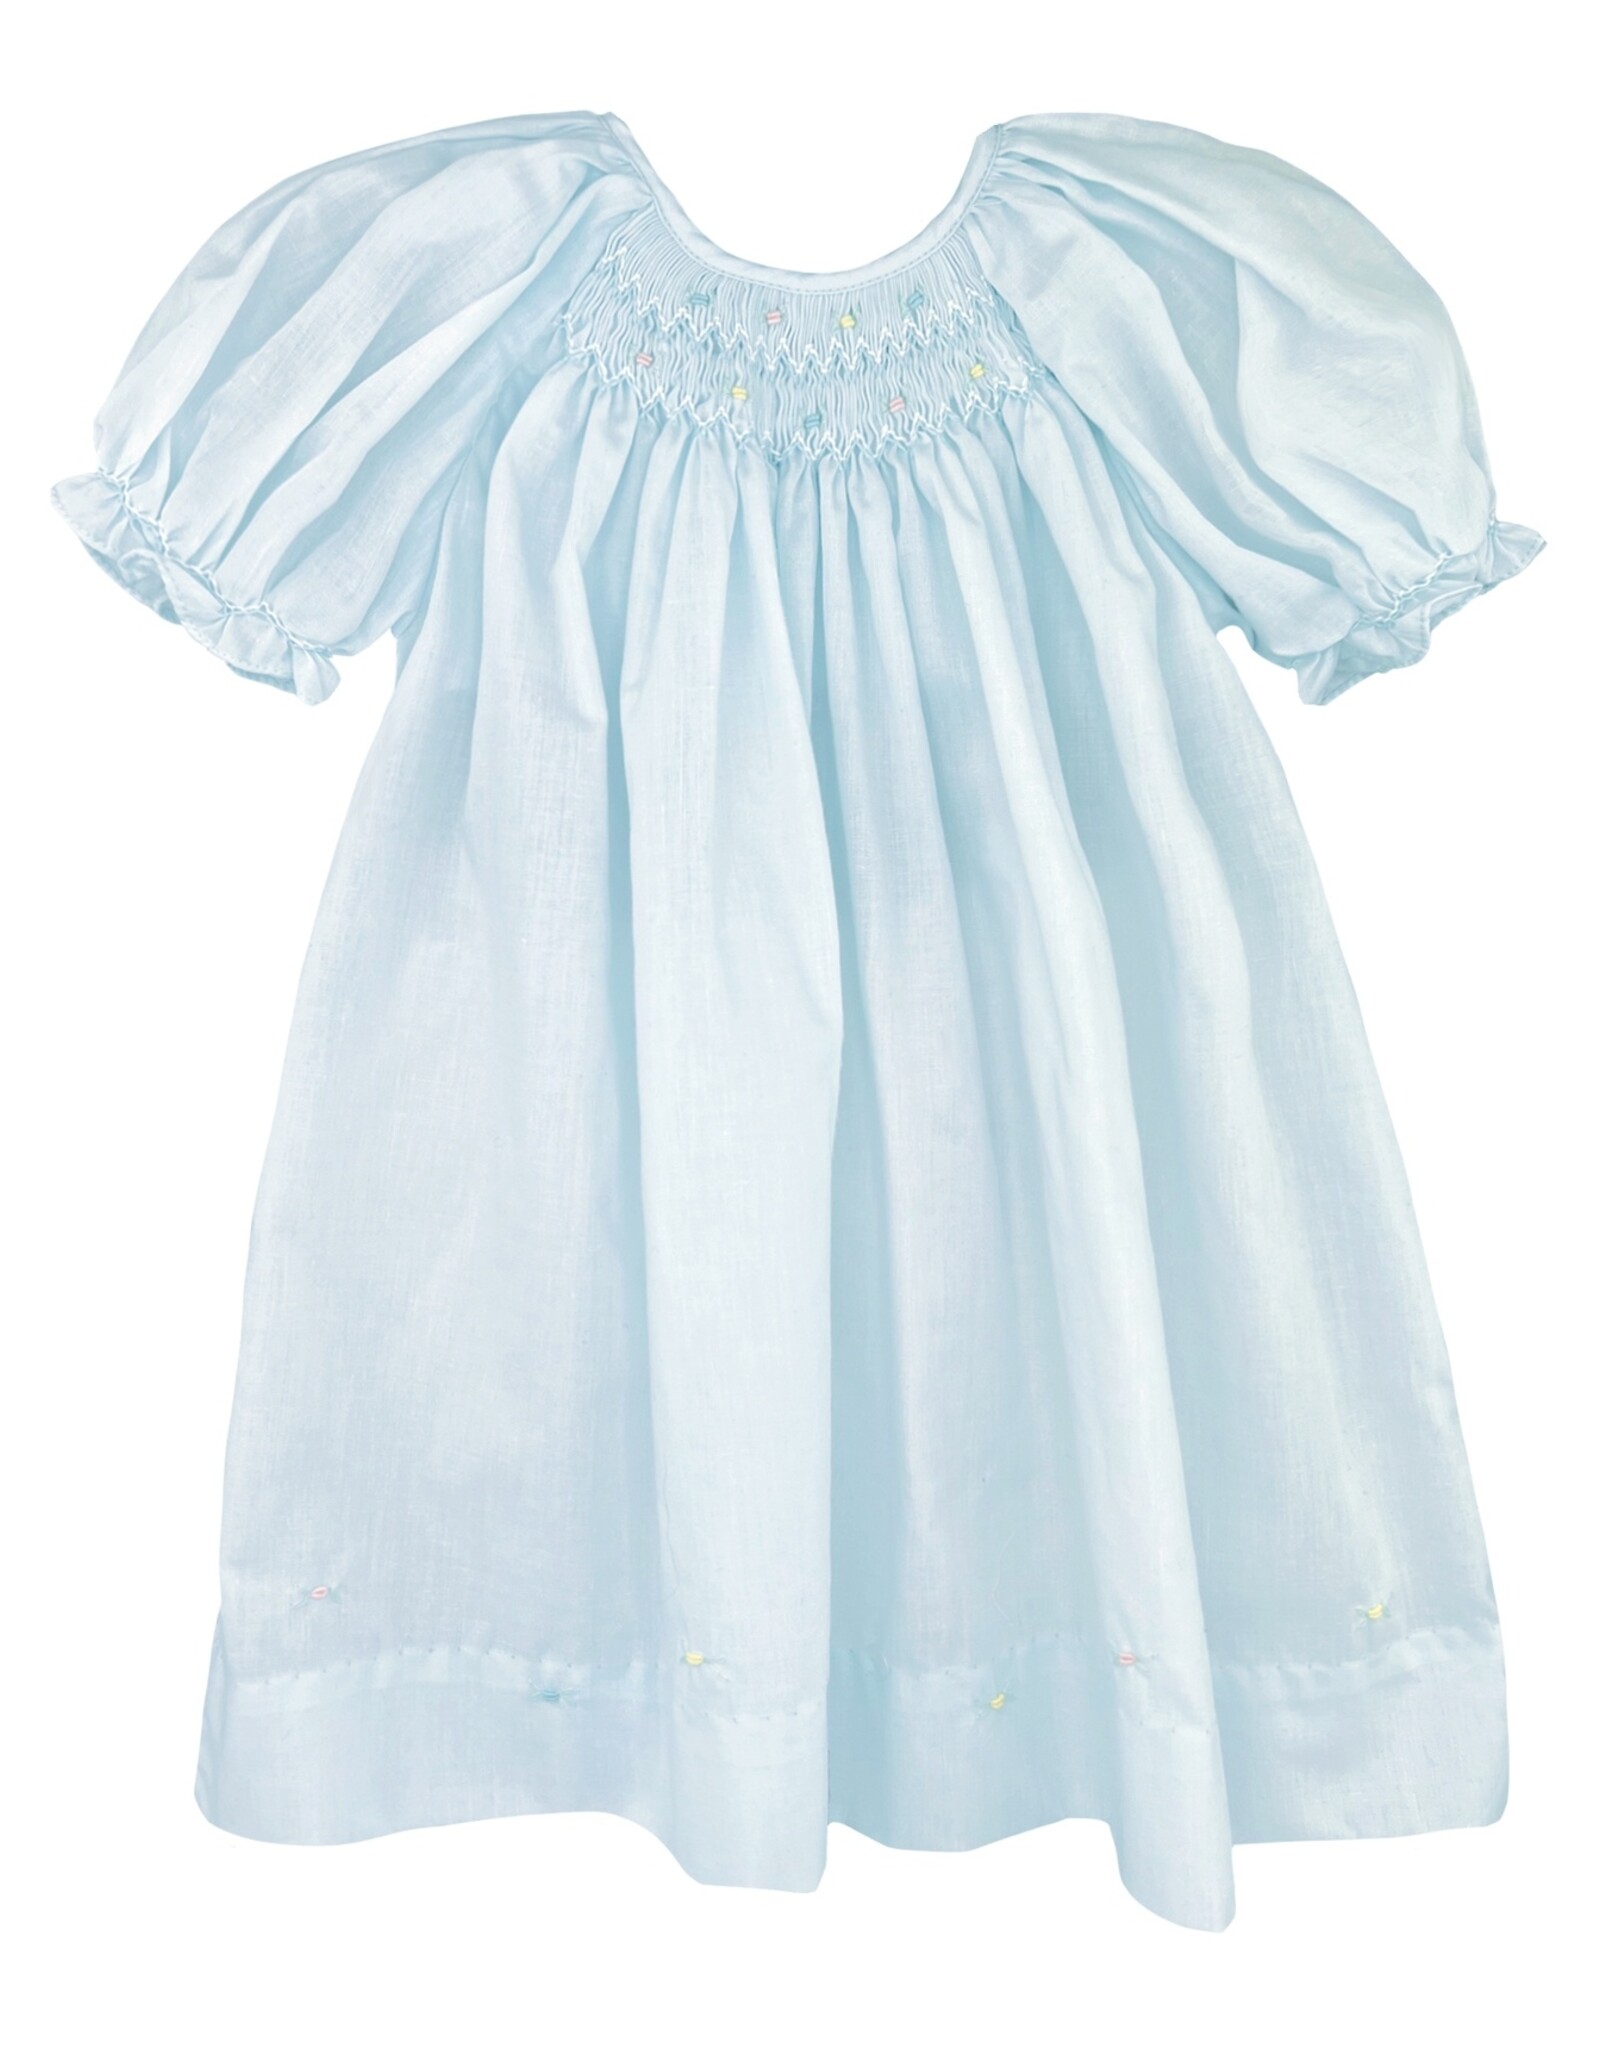 Petit Ami 5902 Smocked Dress Blue